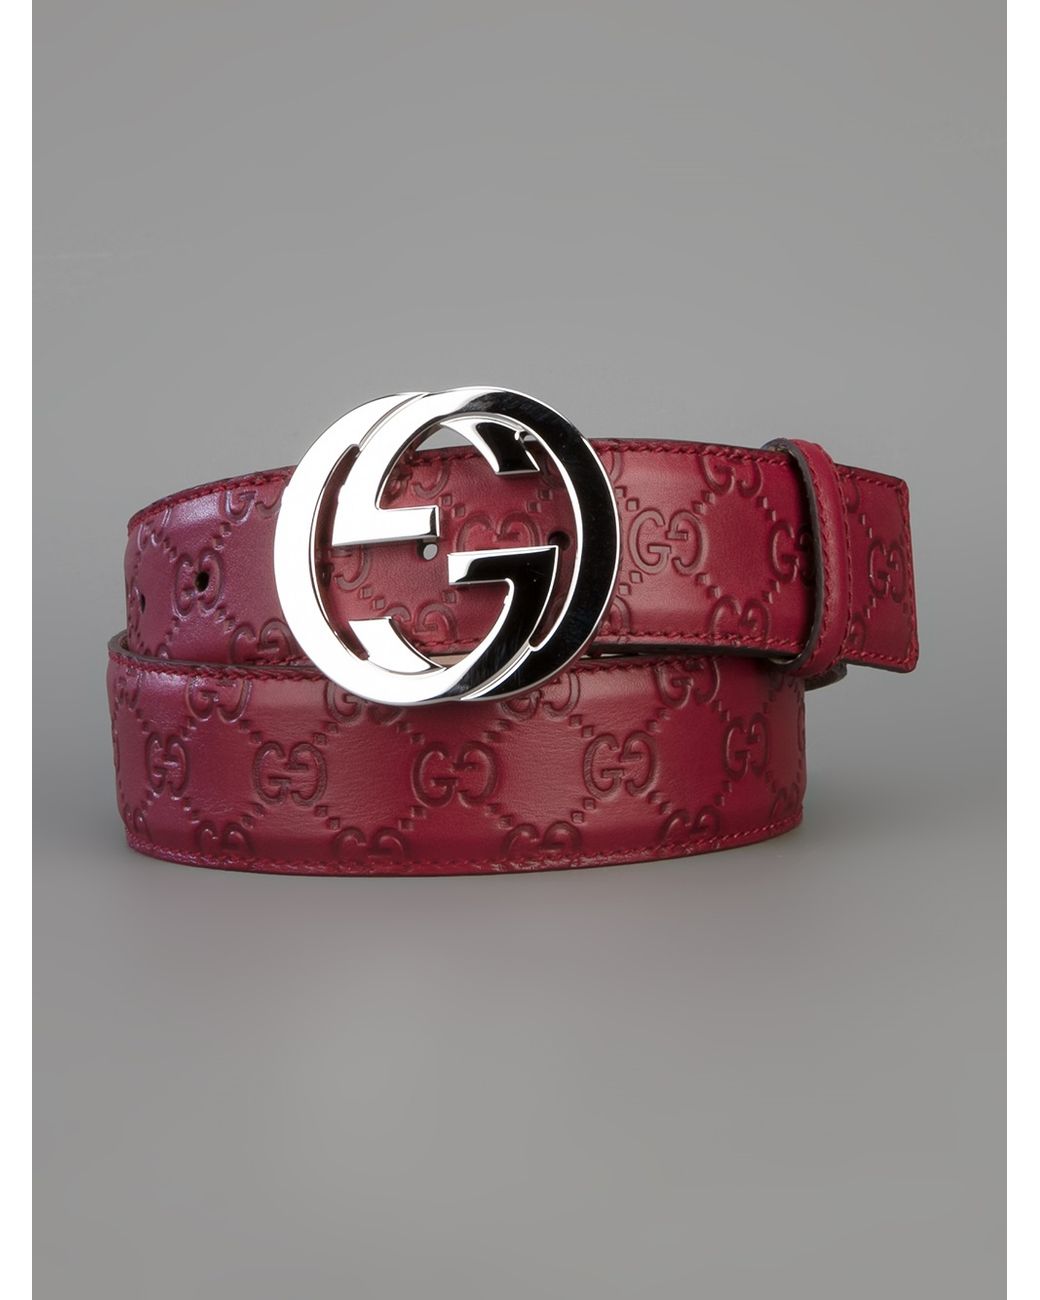 LV & Gucci Brand Belts in nepal